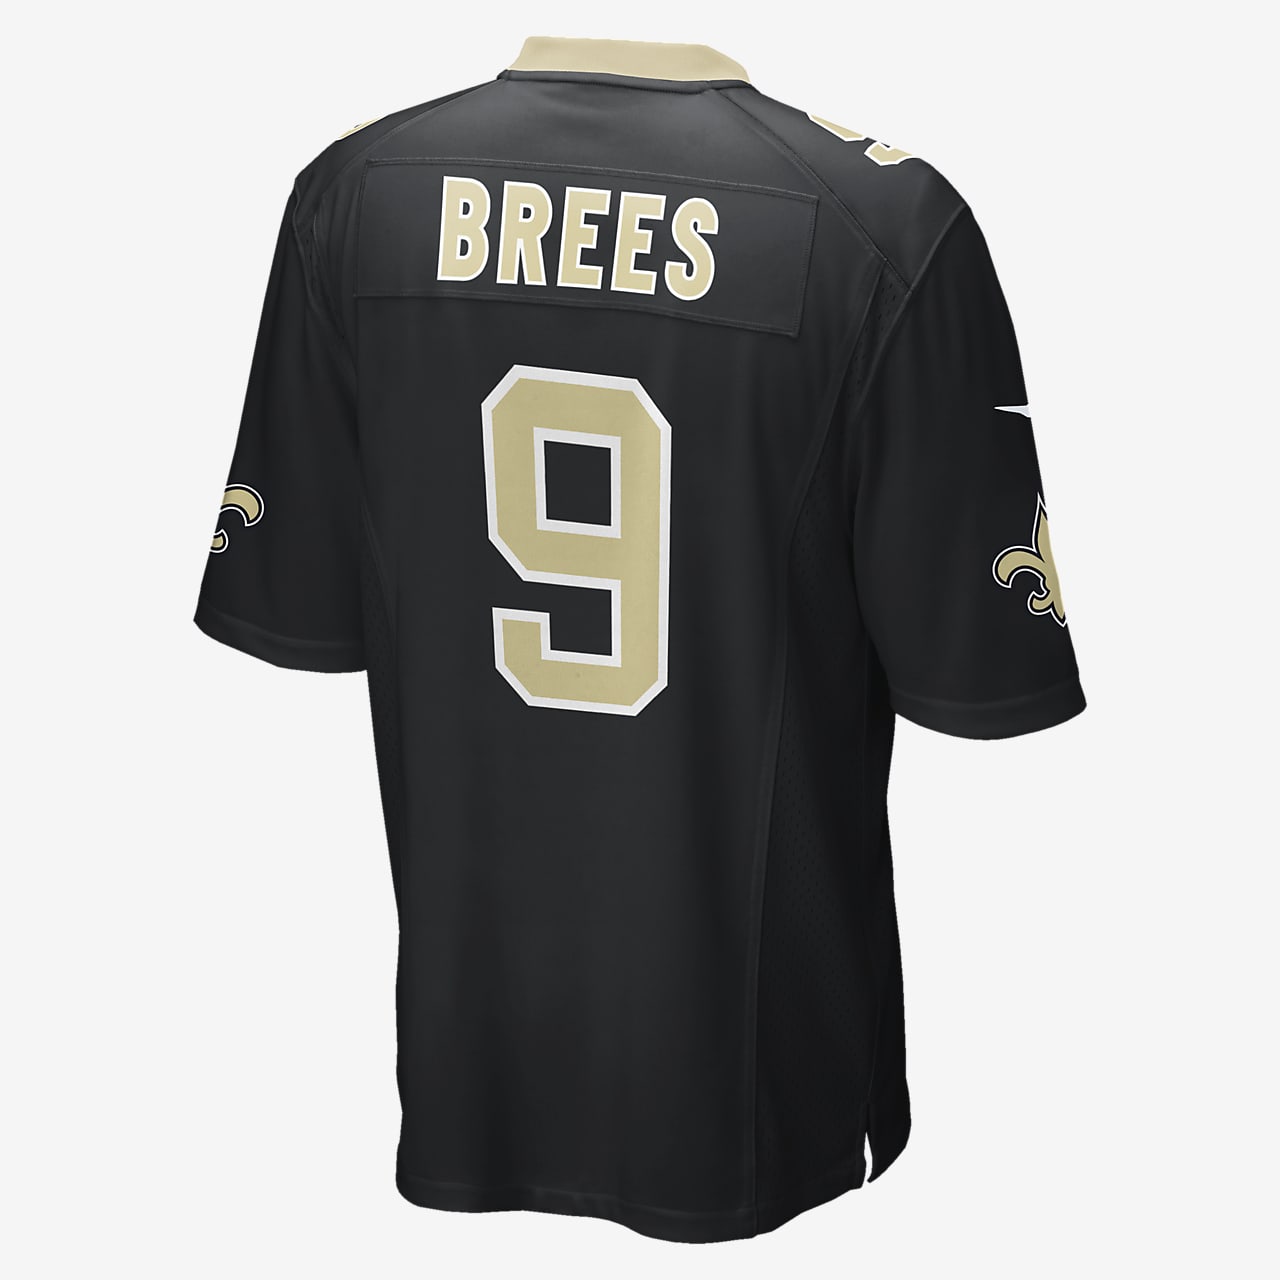 ثريات ناعمه NFL New Orleans Saints (Drew Brees) Men's American Football Home Game Jersey ثريات ناعمه